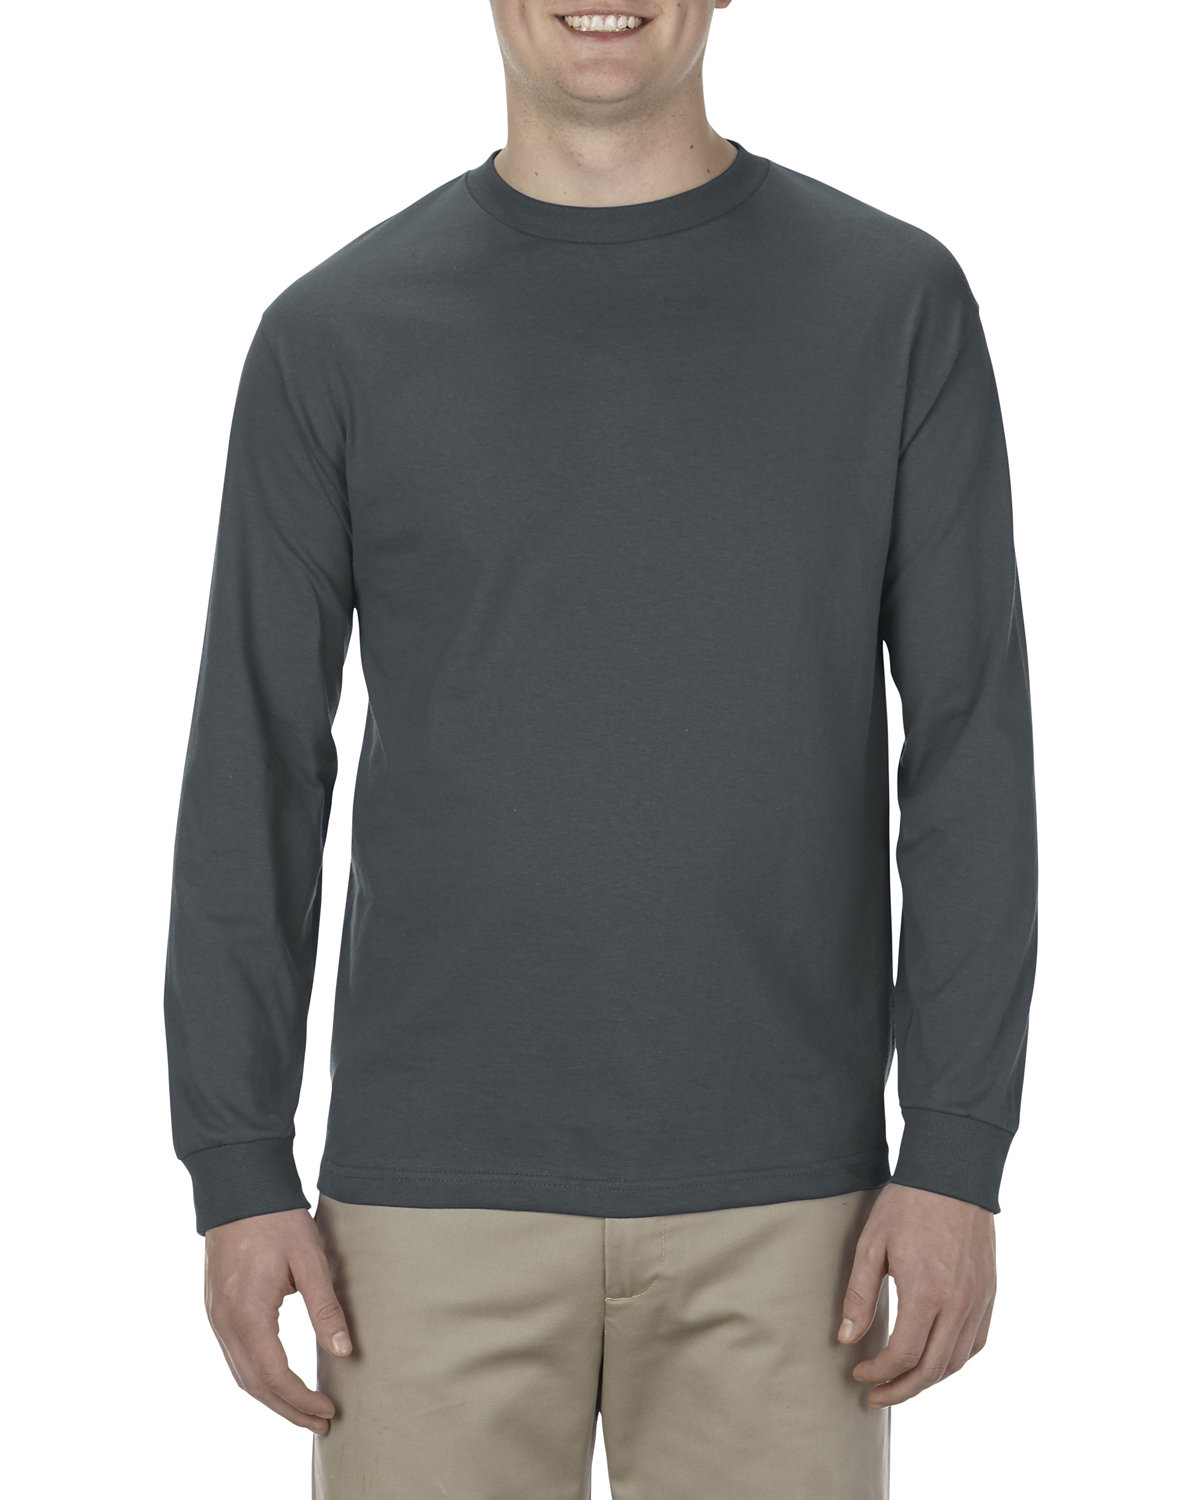 American Apparel Adult Long-Sleeve T-Shirt charcoal 